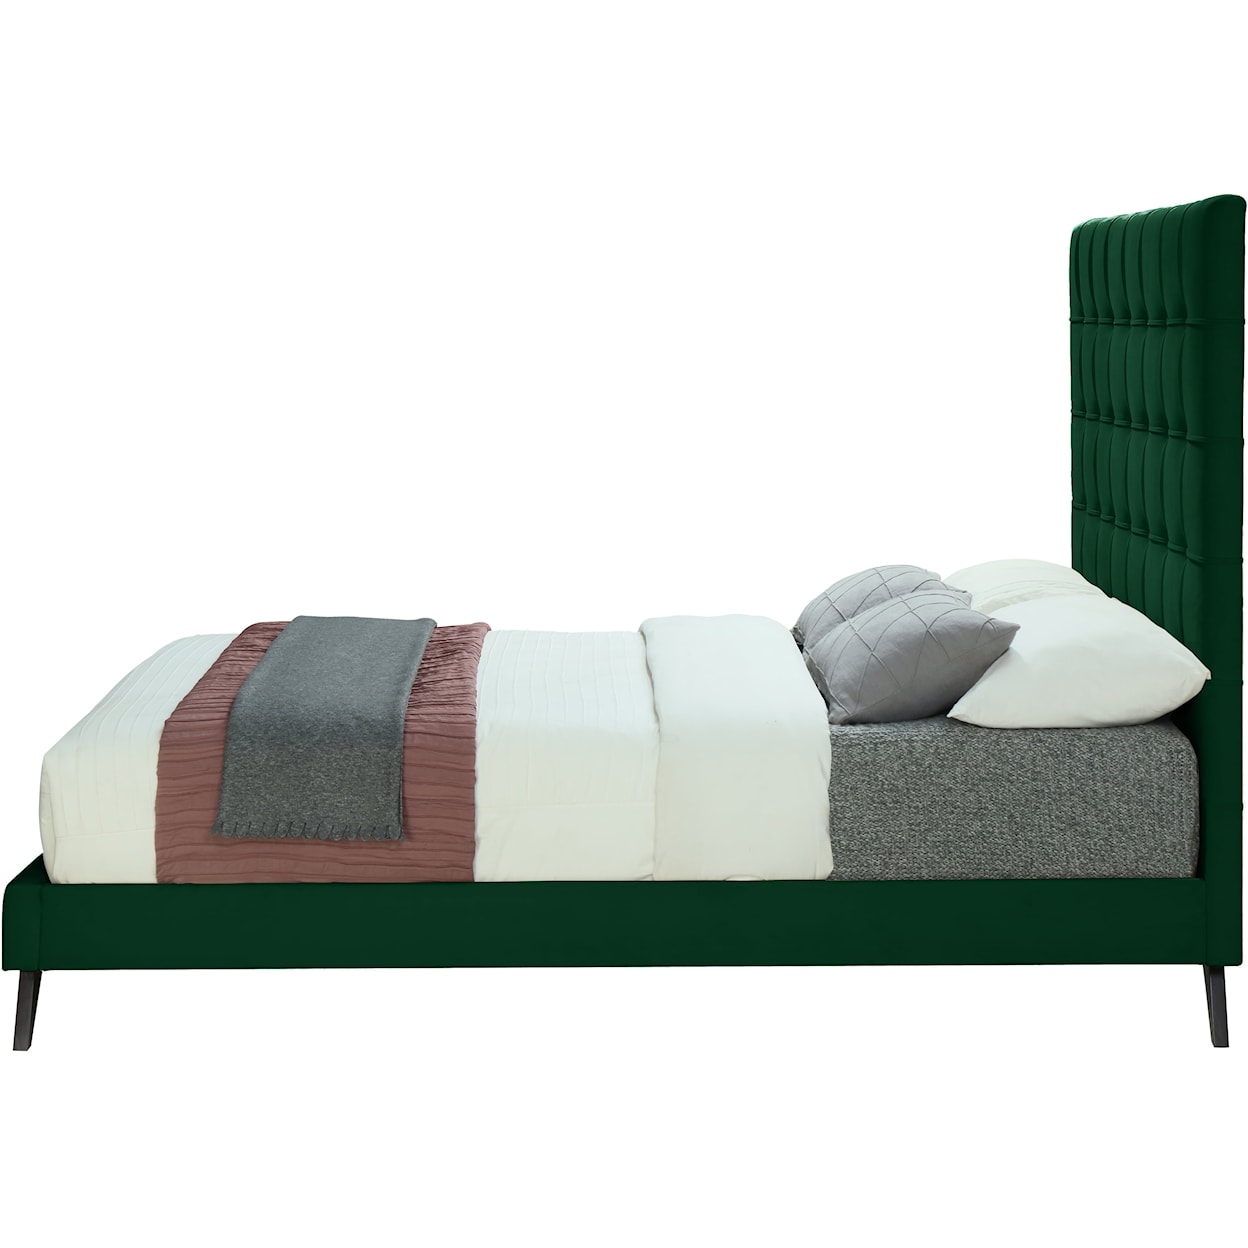 Meridian Furniture Elly Full Bed